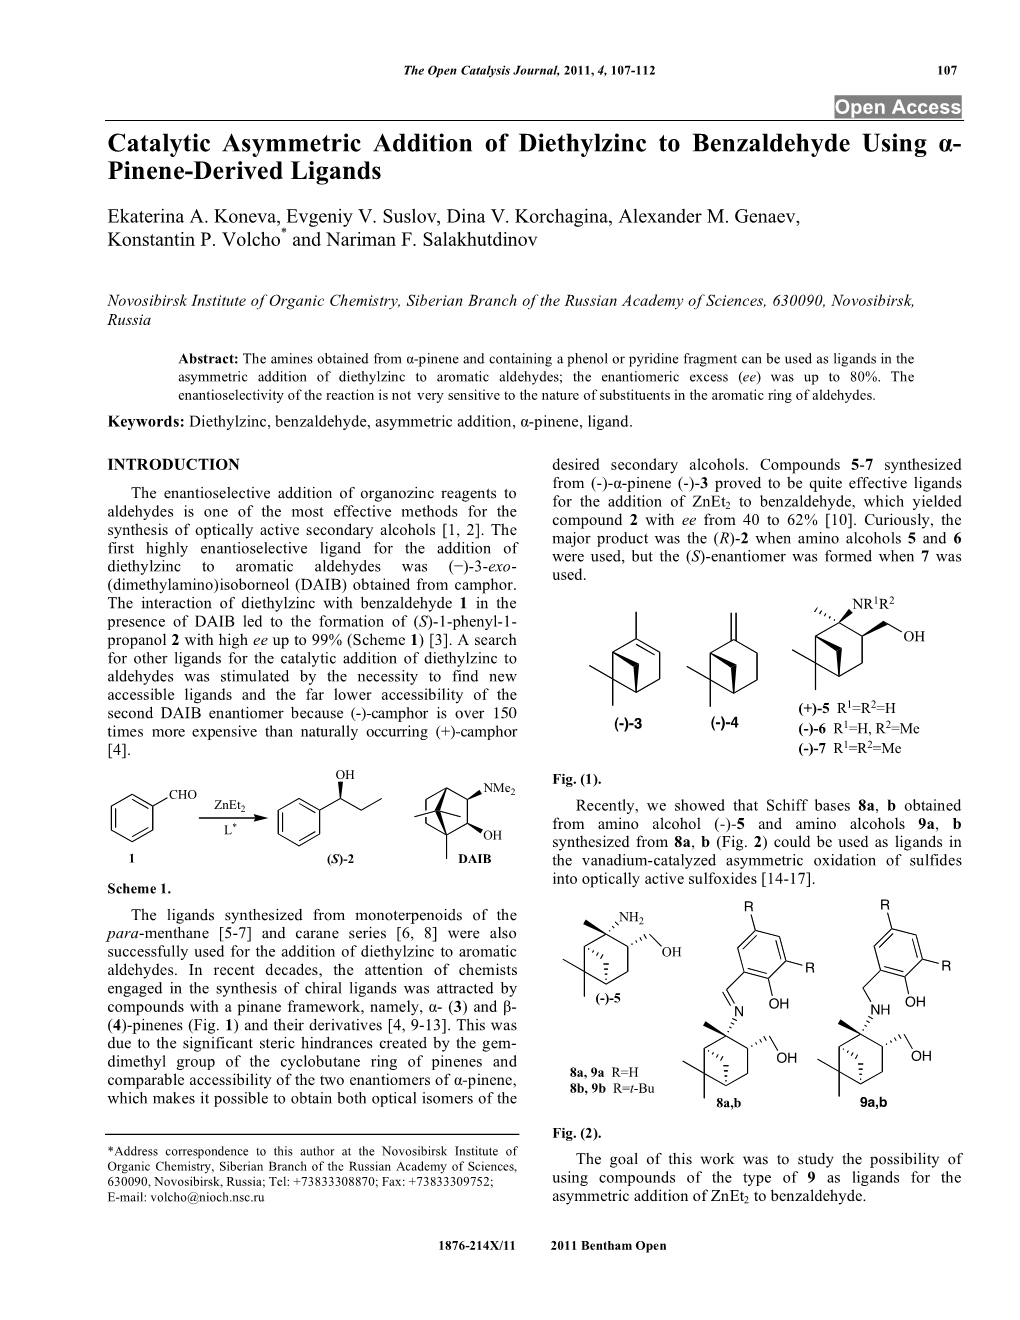 Catalytic Asymmetric Addition of Diethylzinc to Benzaldehyde Using Α